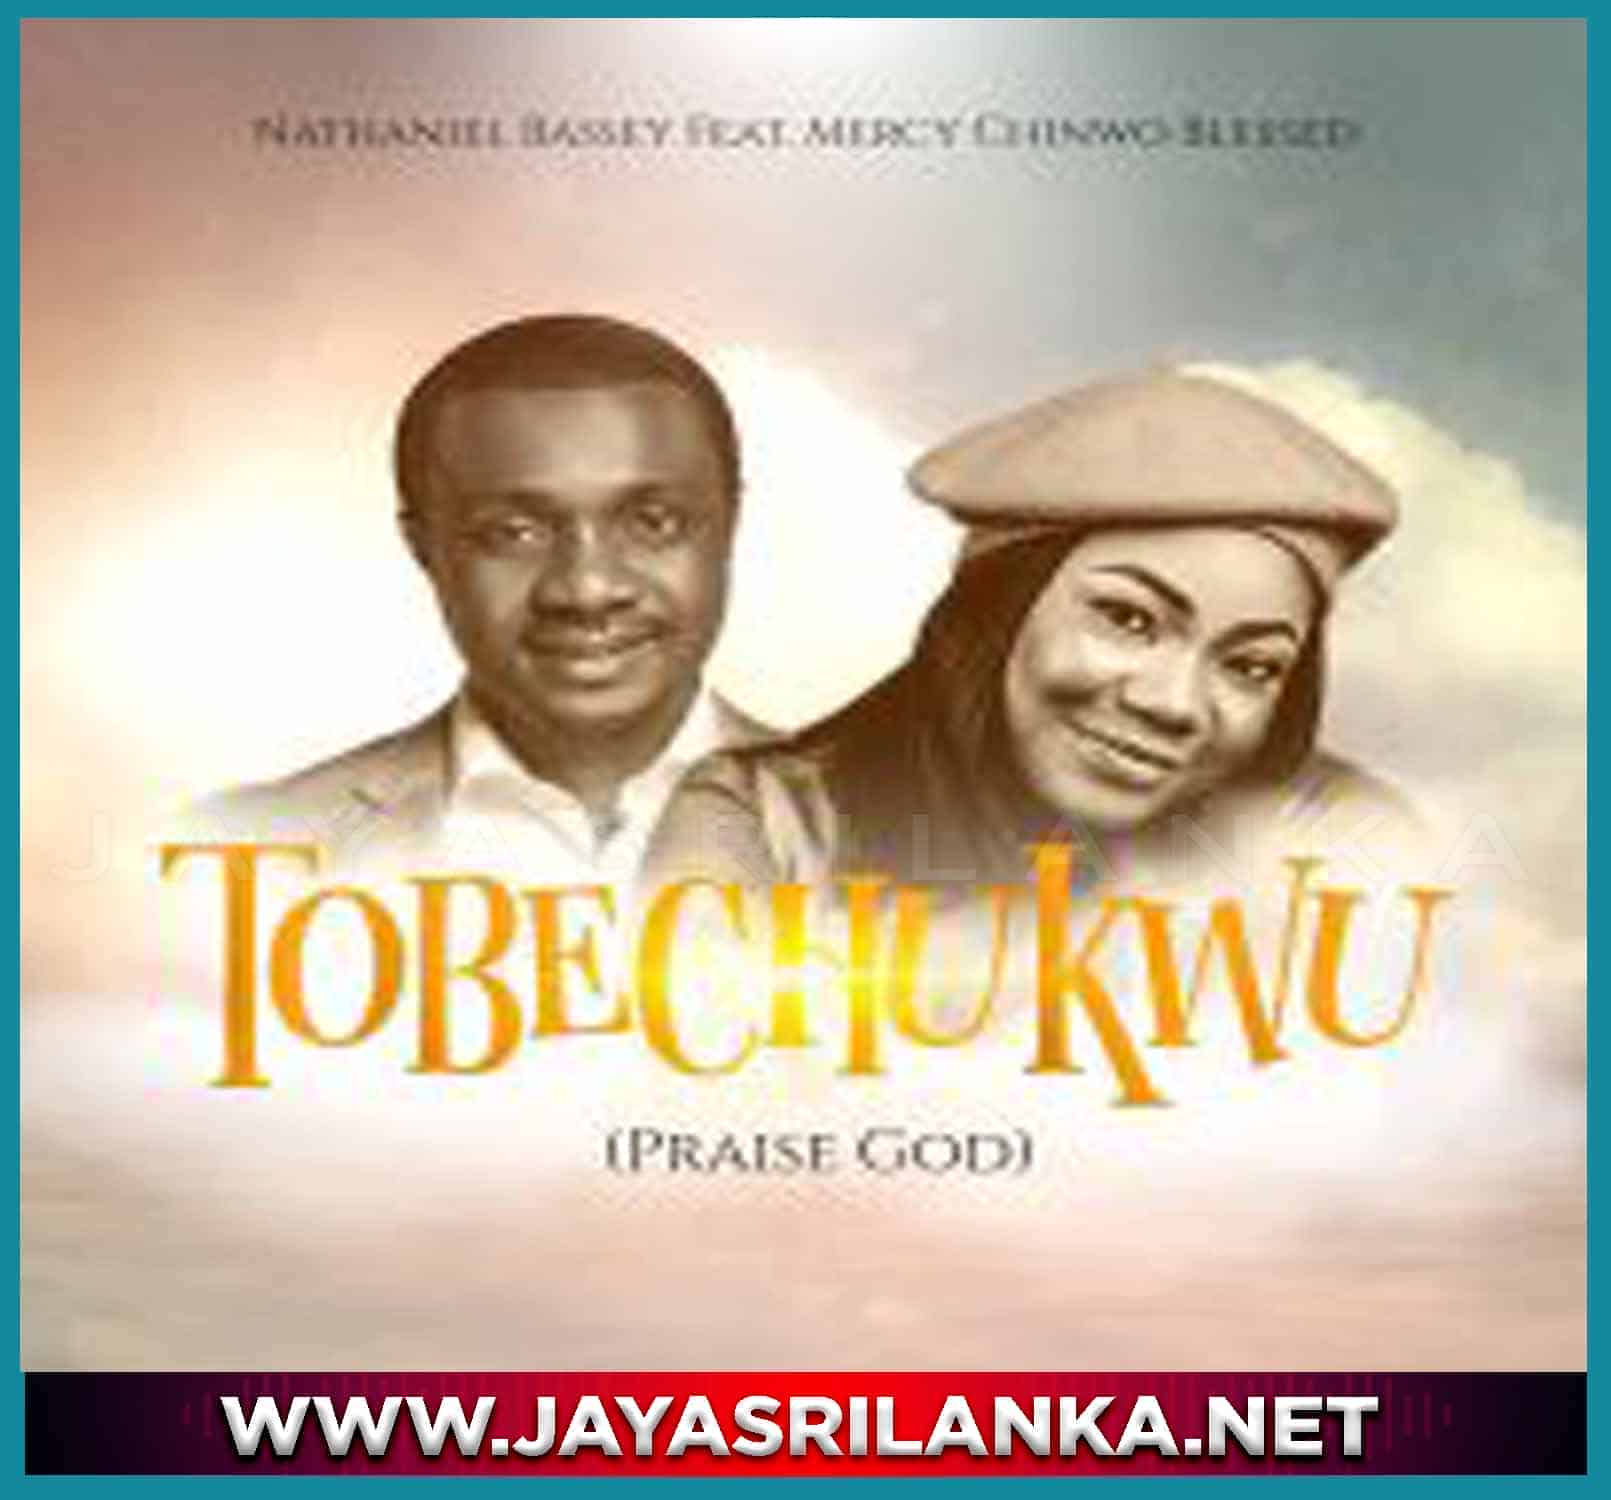 Tobechukwu (Praise God)